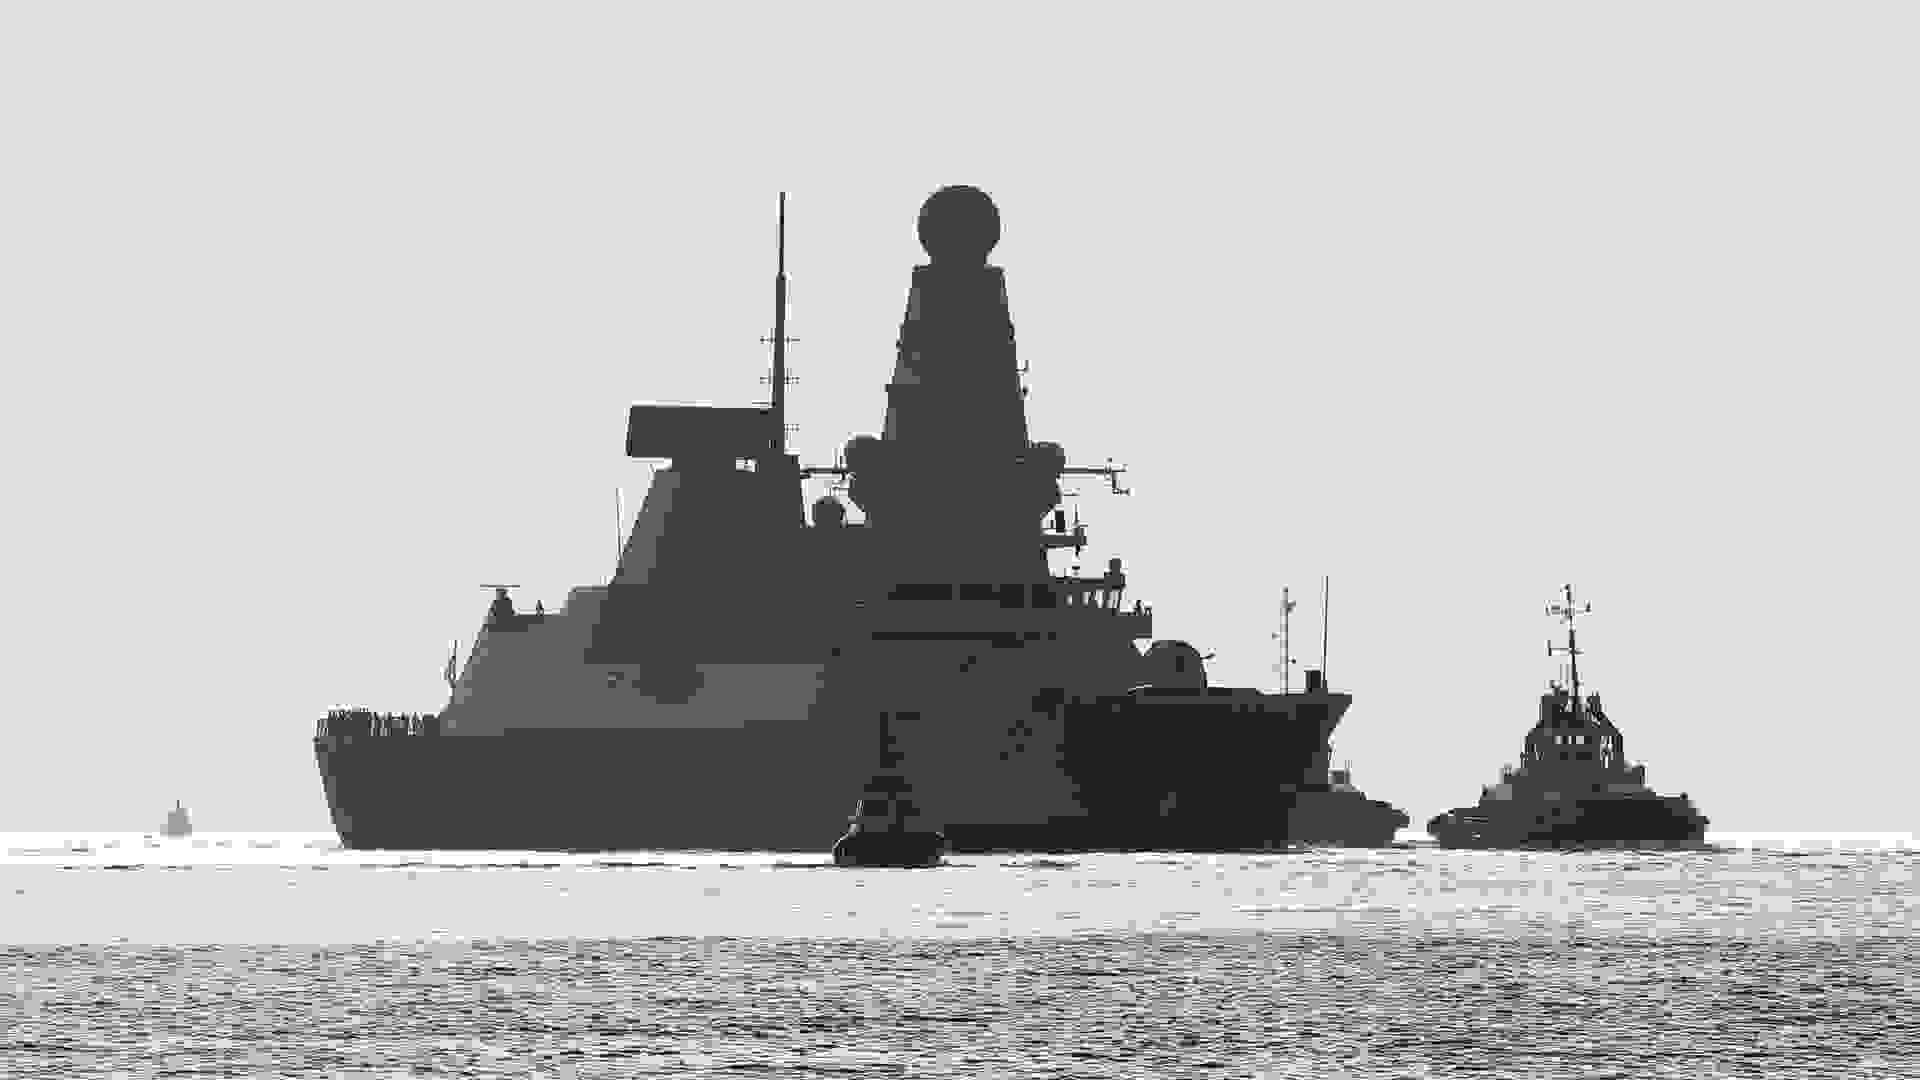 HMS Diamond. ©Royal Navy (CC BY 2.0 Deed)